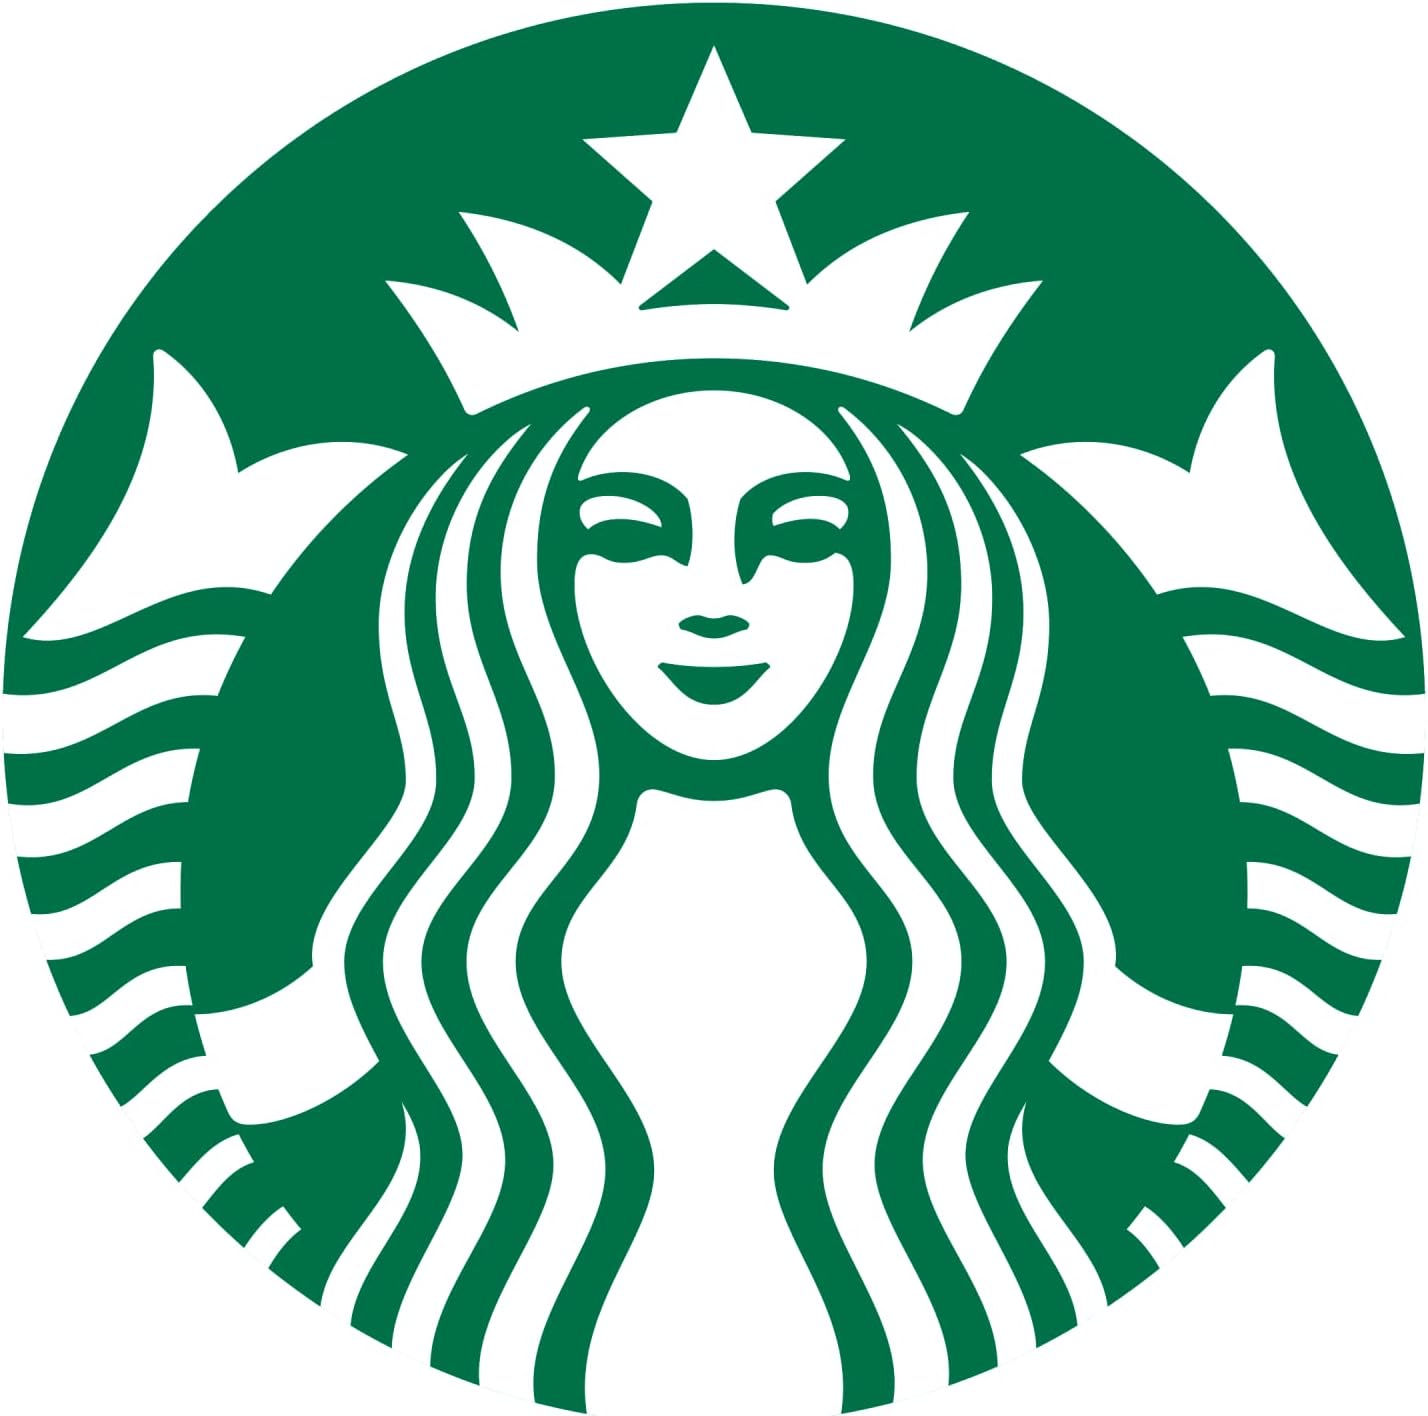 product-grid-gallery-item پودر قهوه اسپرسو روست استارباکس Starbucks وزن 200 گرم